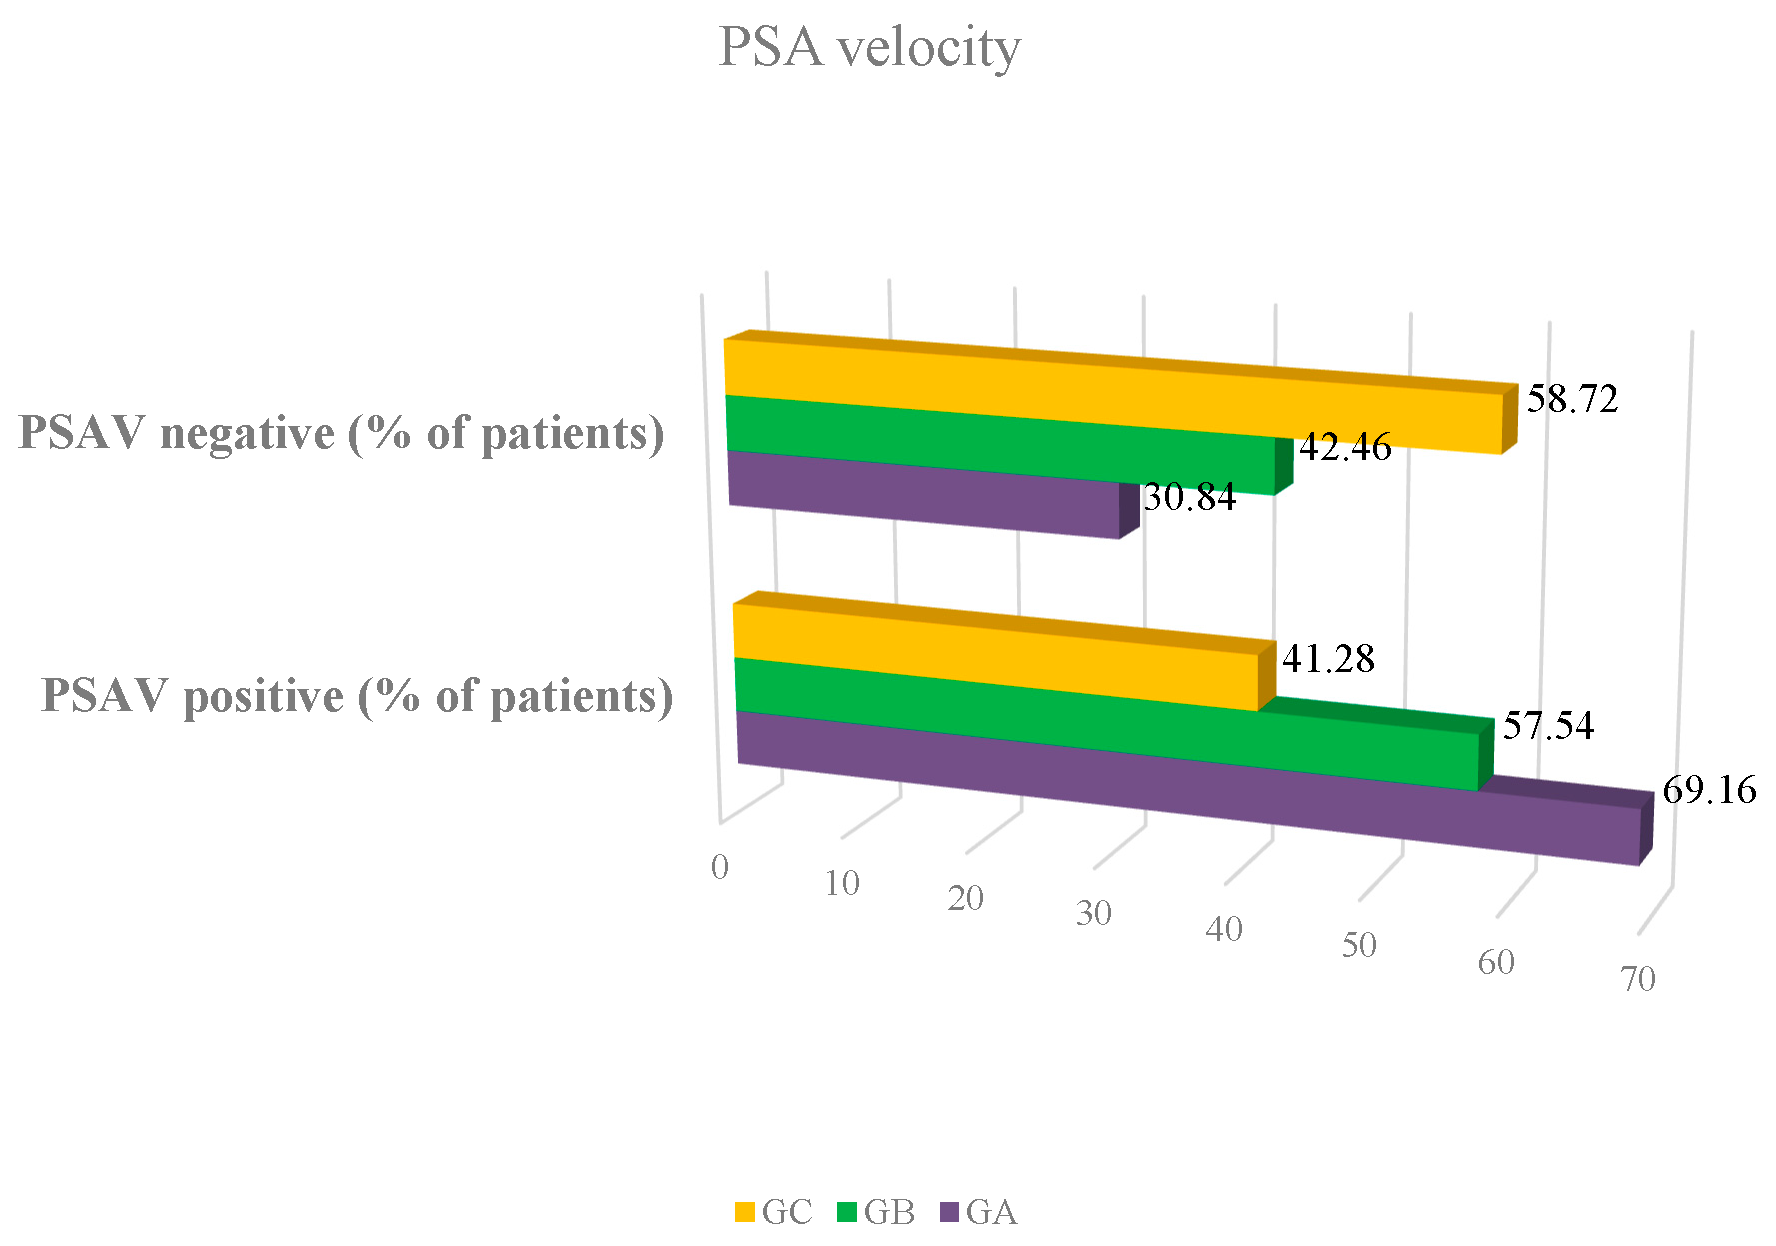 prostatitis and psa velocity